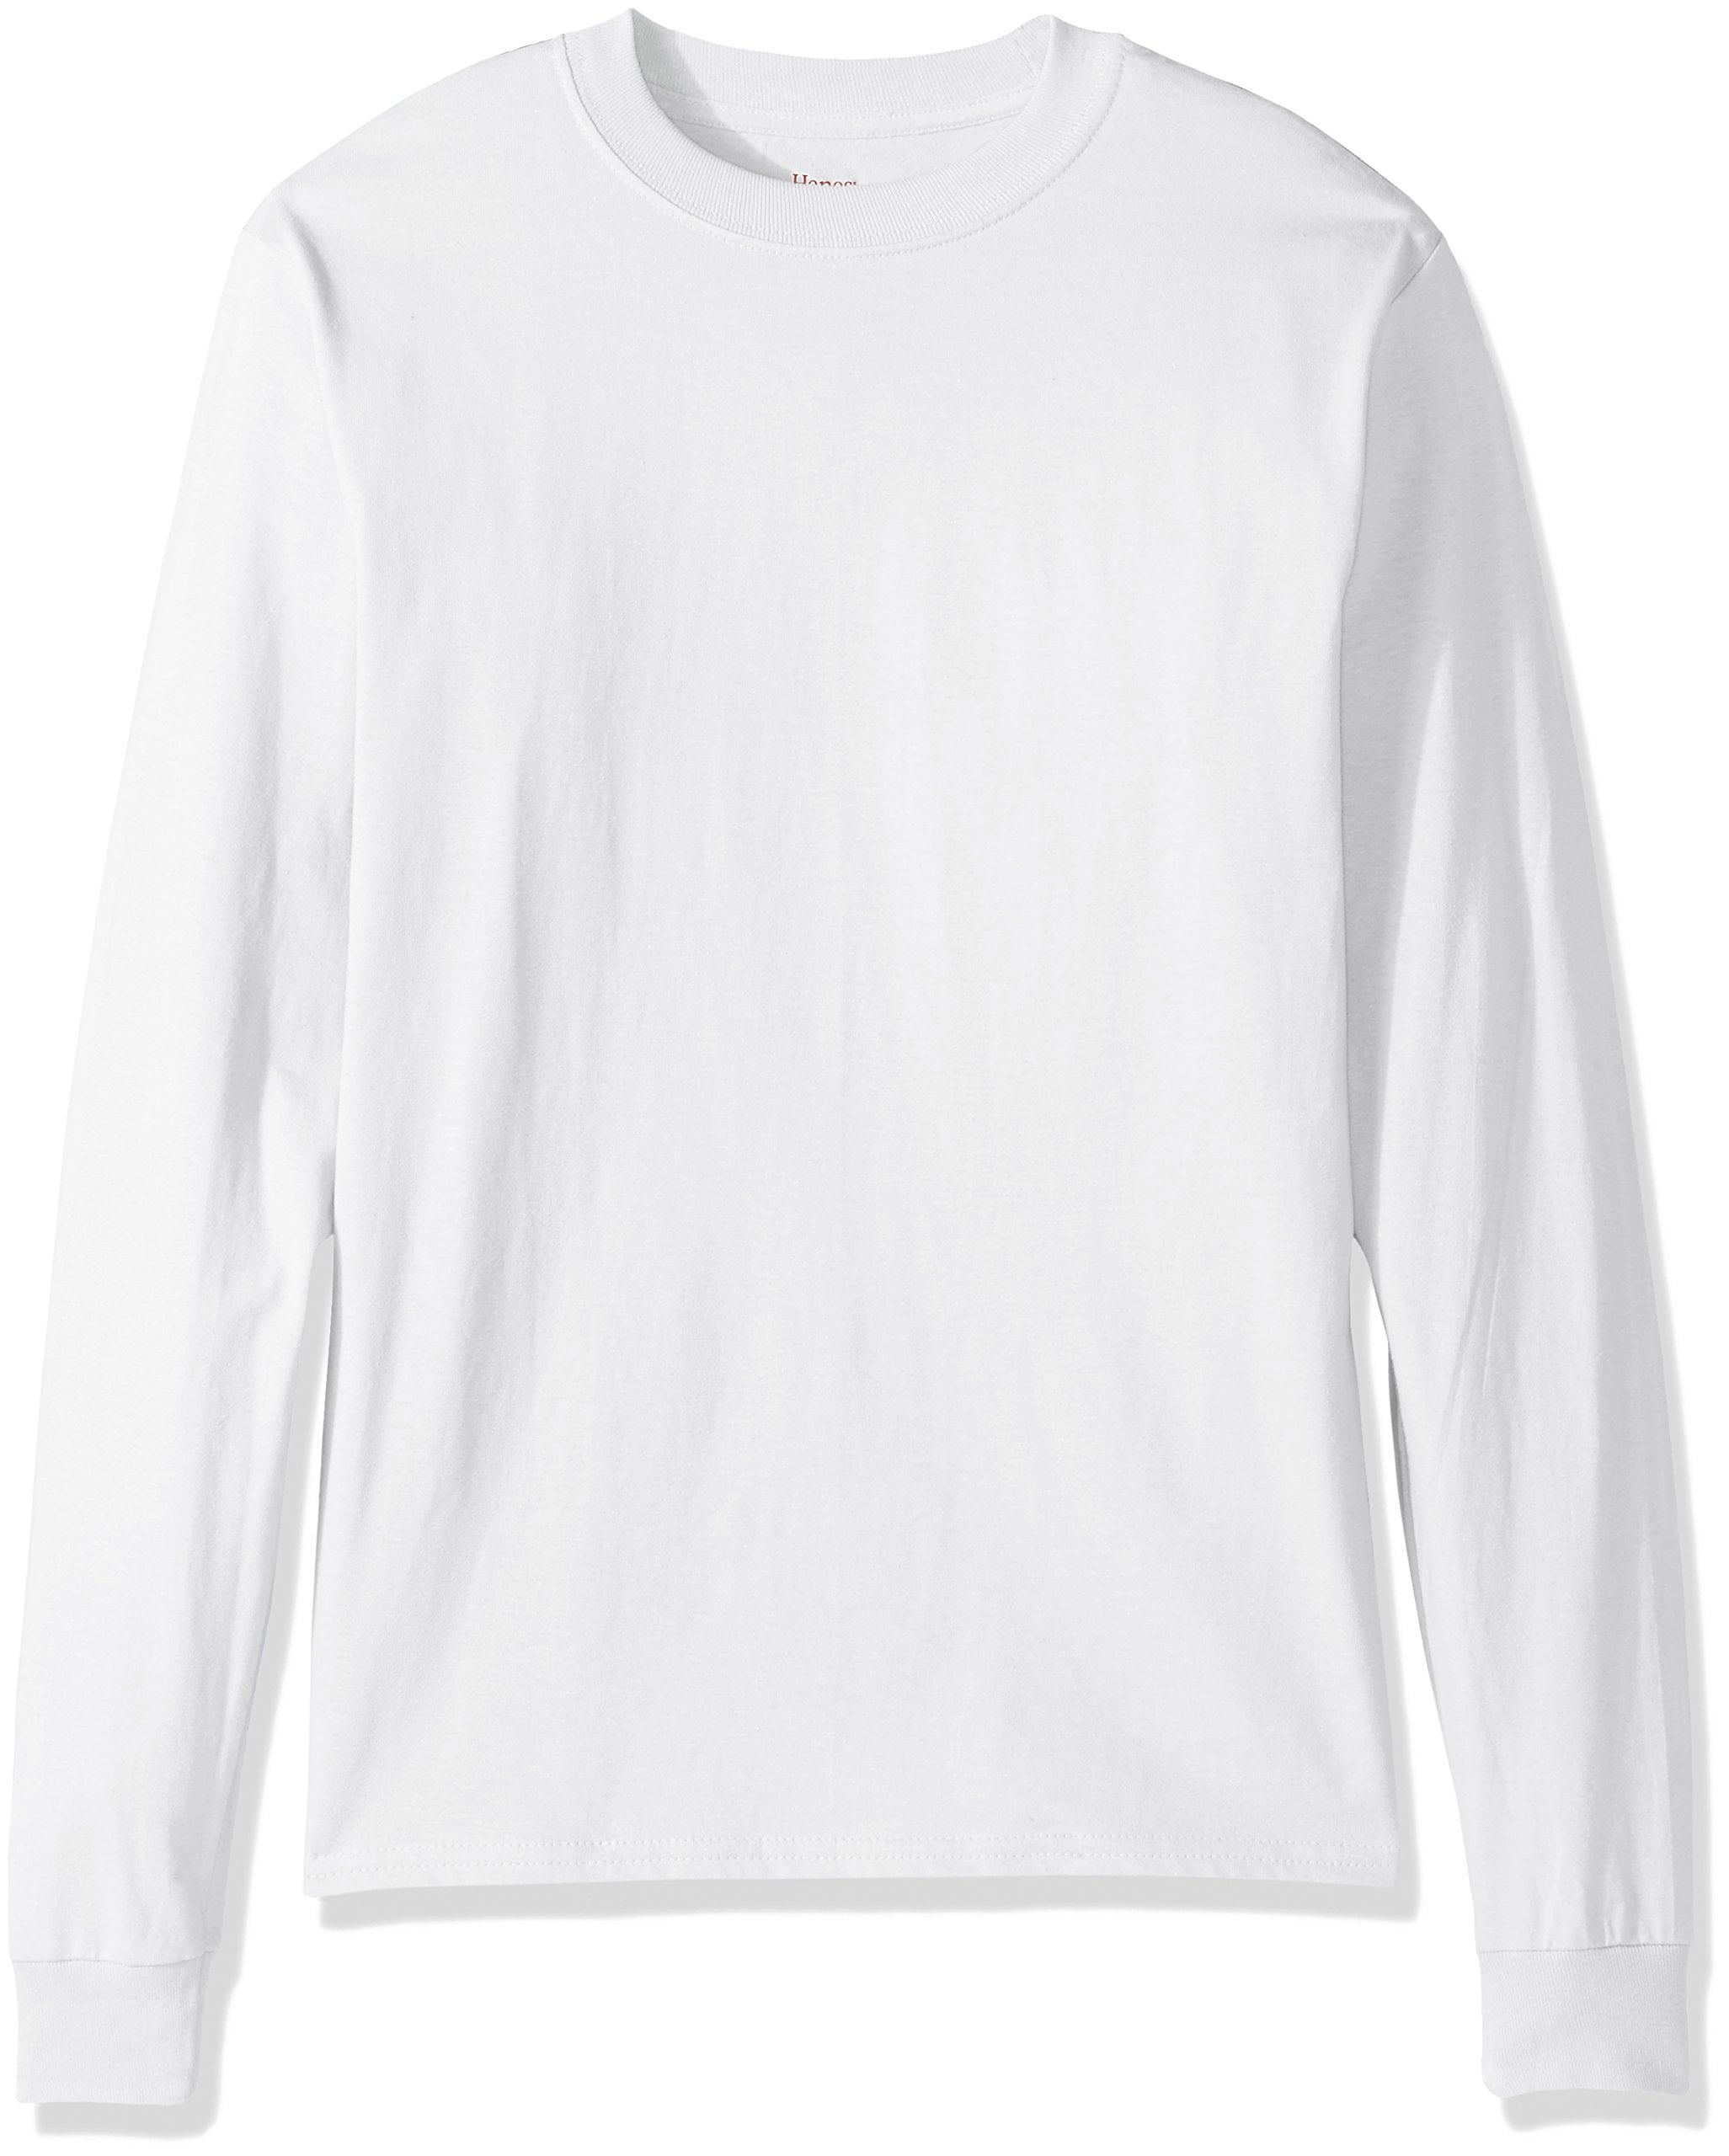 Hanes Men's Beefy Long Sleeve Shirt X-Large White - Walmart.com